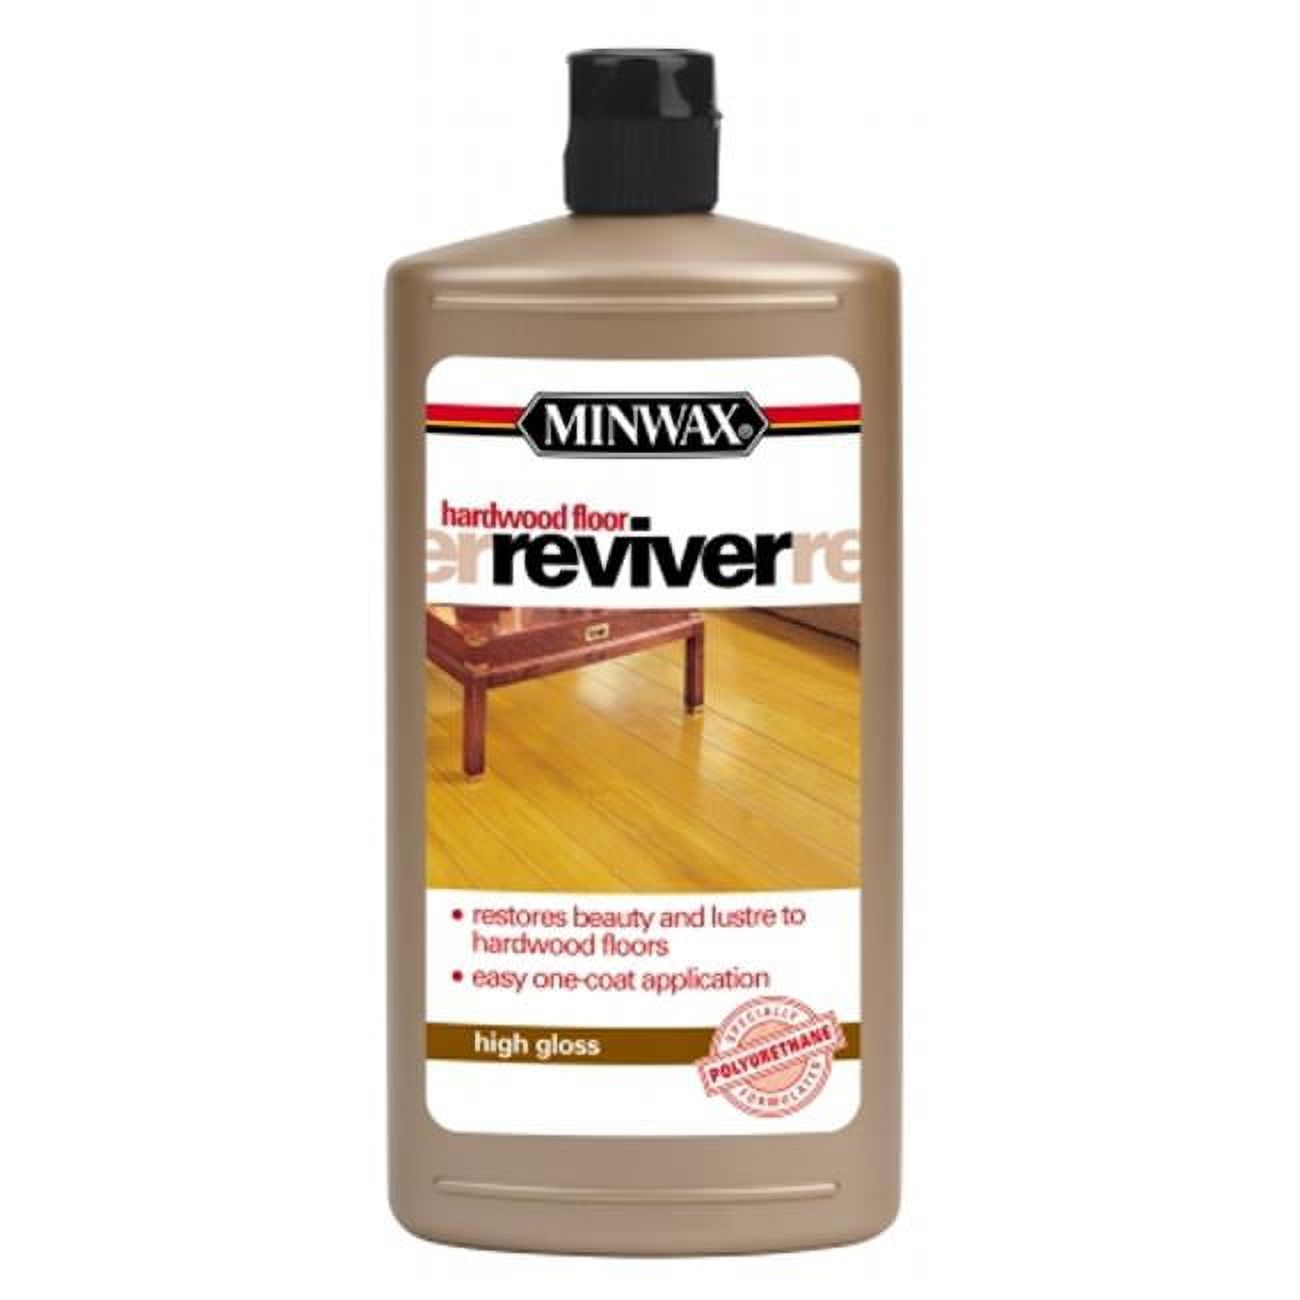 Minwax 60950 32-Ounce High Gloss Reviver Hardwood Floor Restorer - image 1 of 2